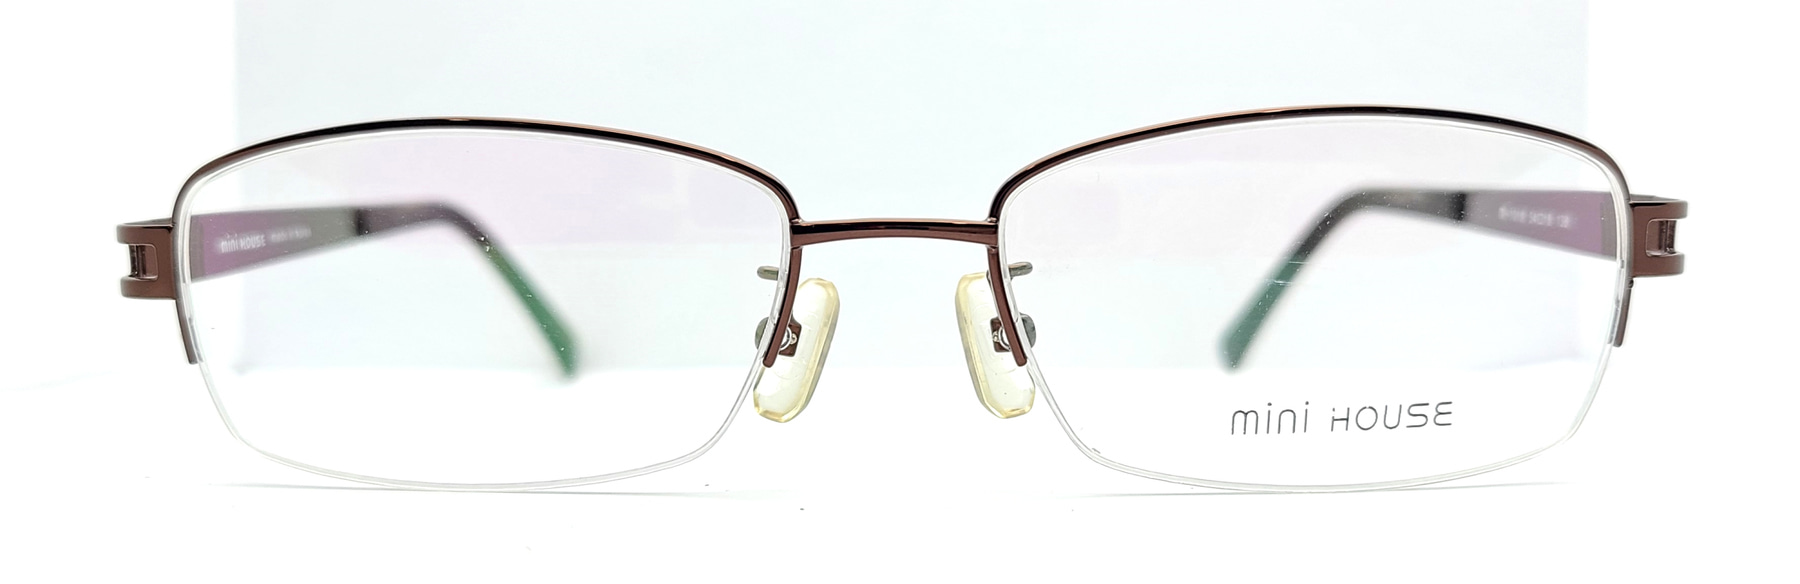 MINIHOUSE M-1018, Korean glasses, sunglasses, eyeglasses, glasses